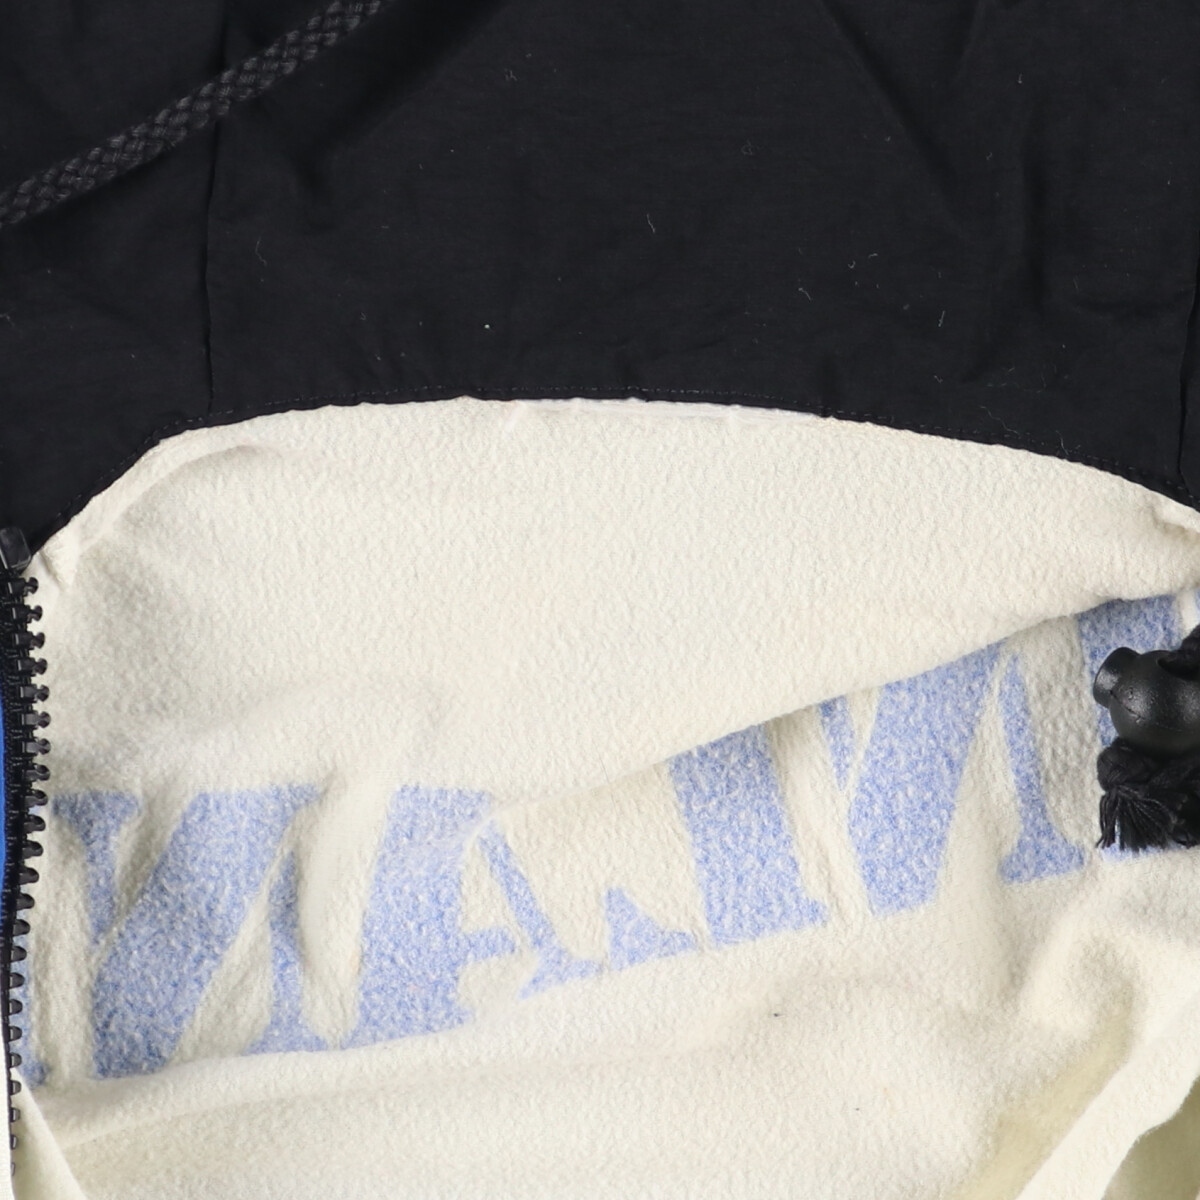  б/у одежда 90 годы Kappa Kappa джерси Parker спортивная куртка мужской M Vintage /eaa420556